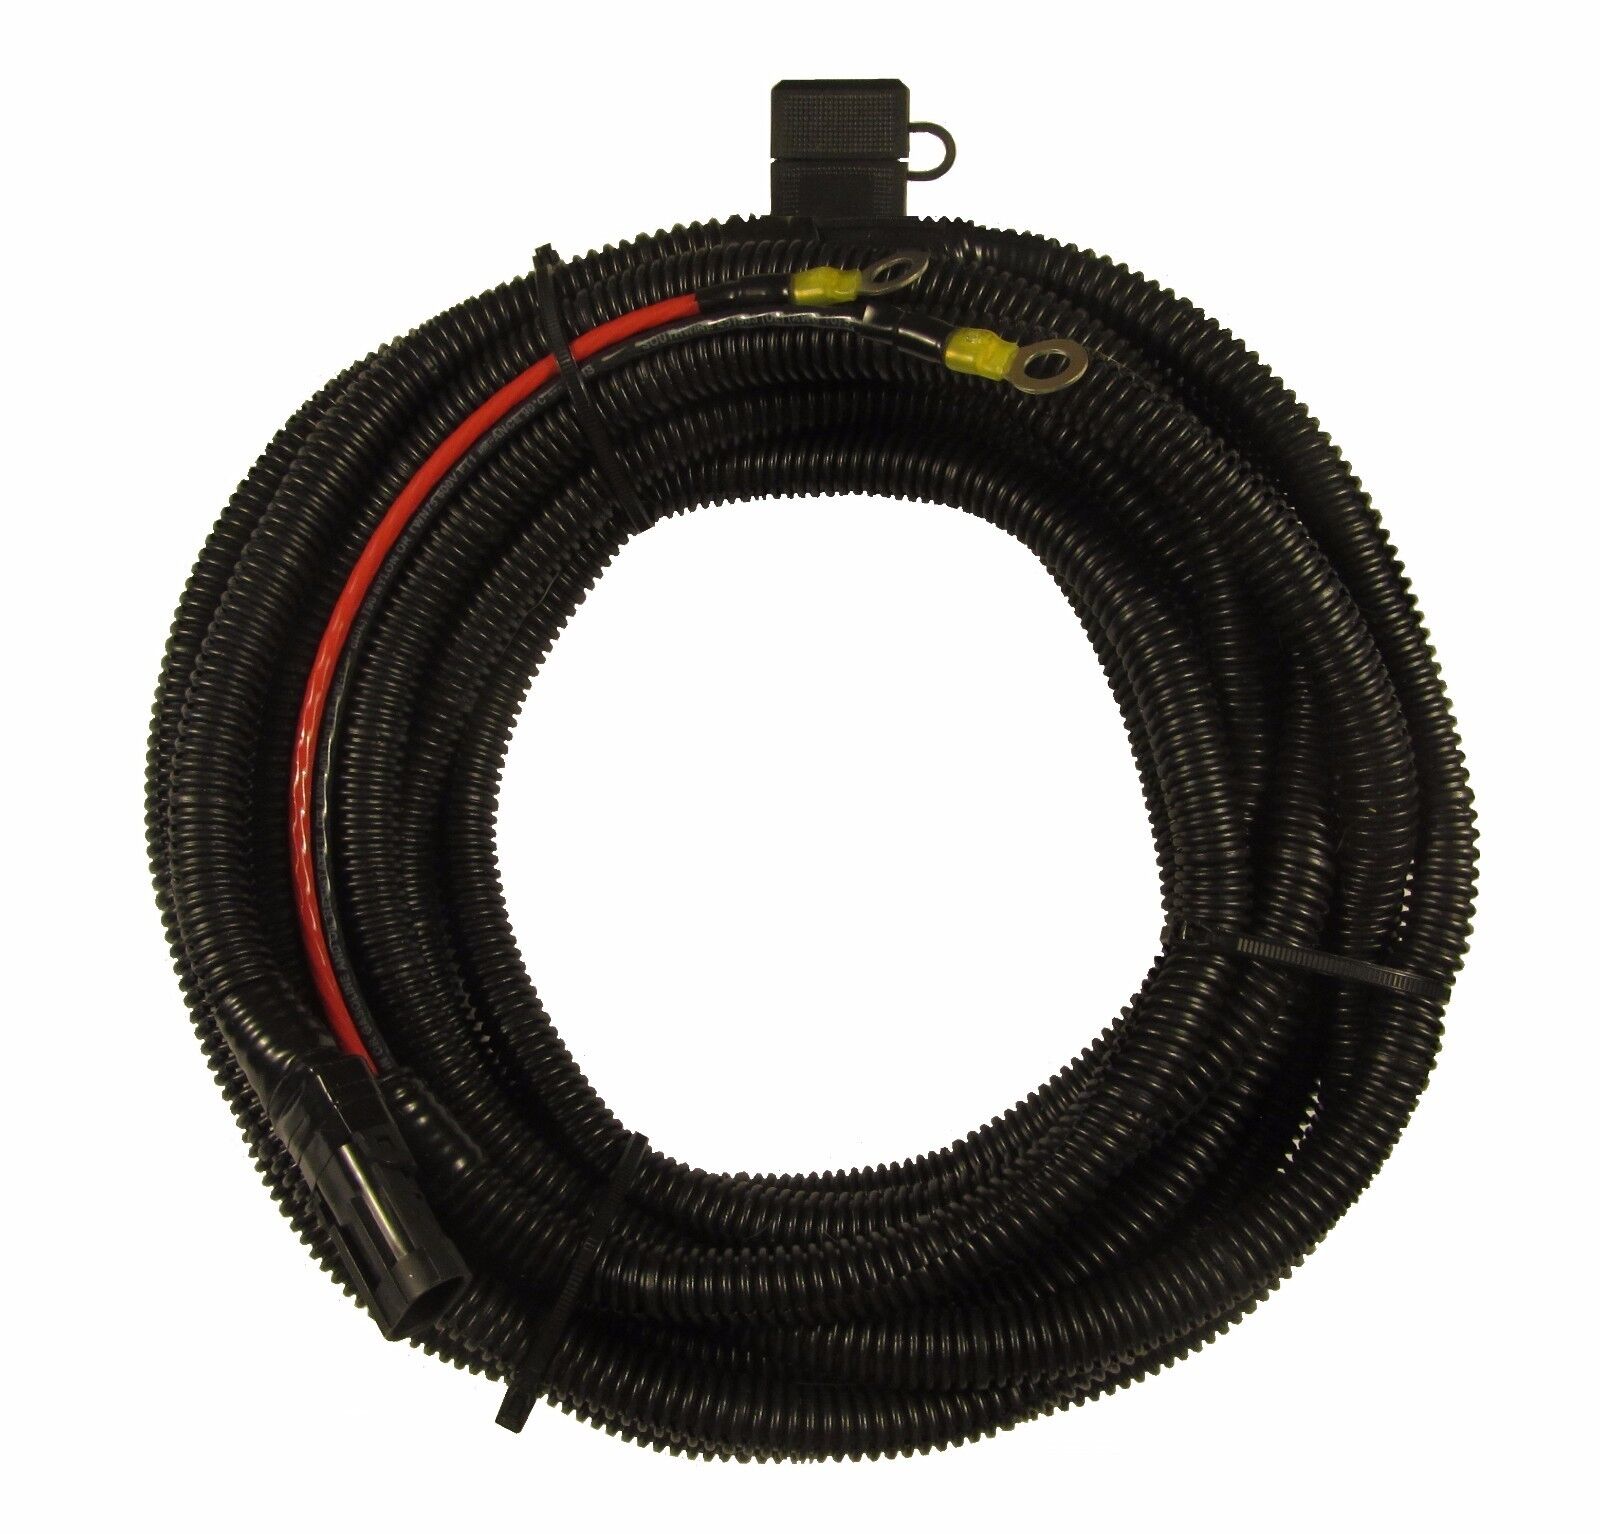 h28010 wiring harness